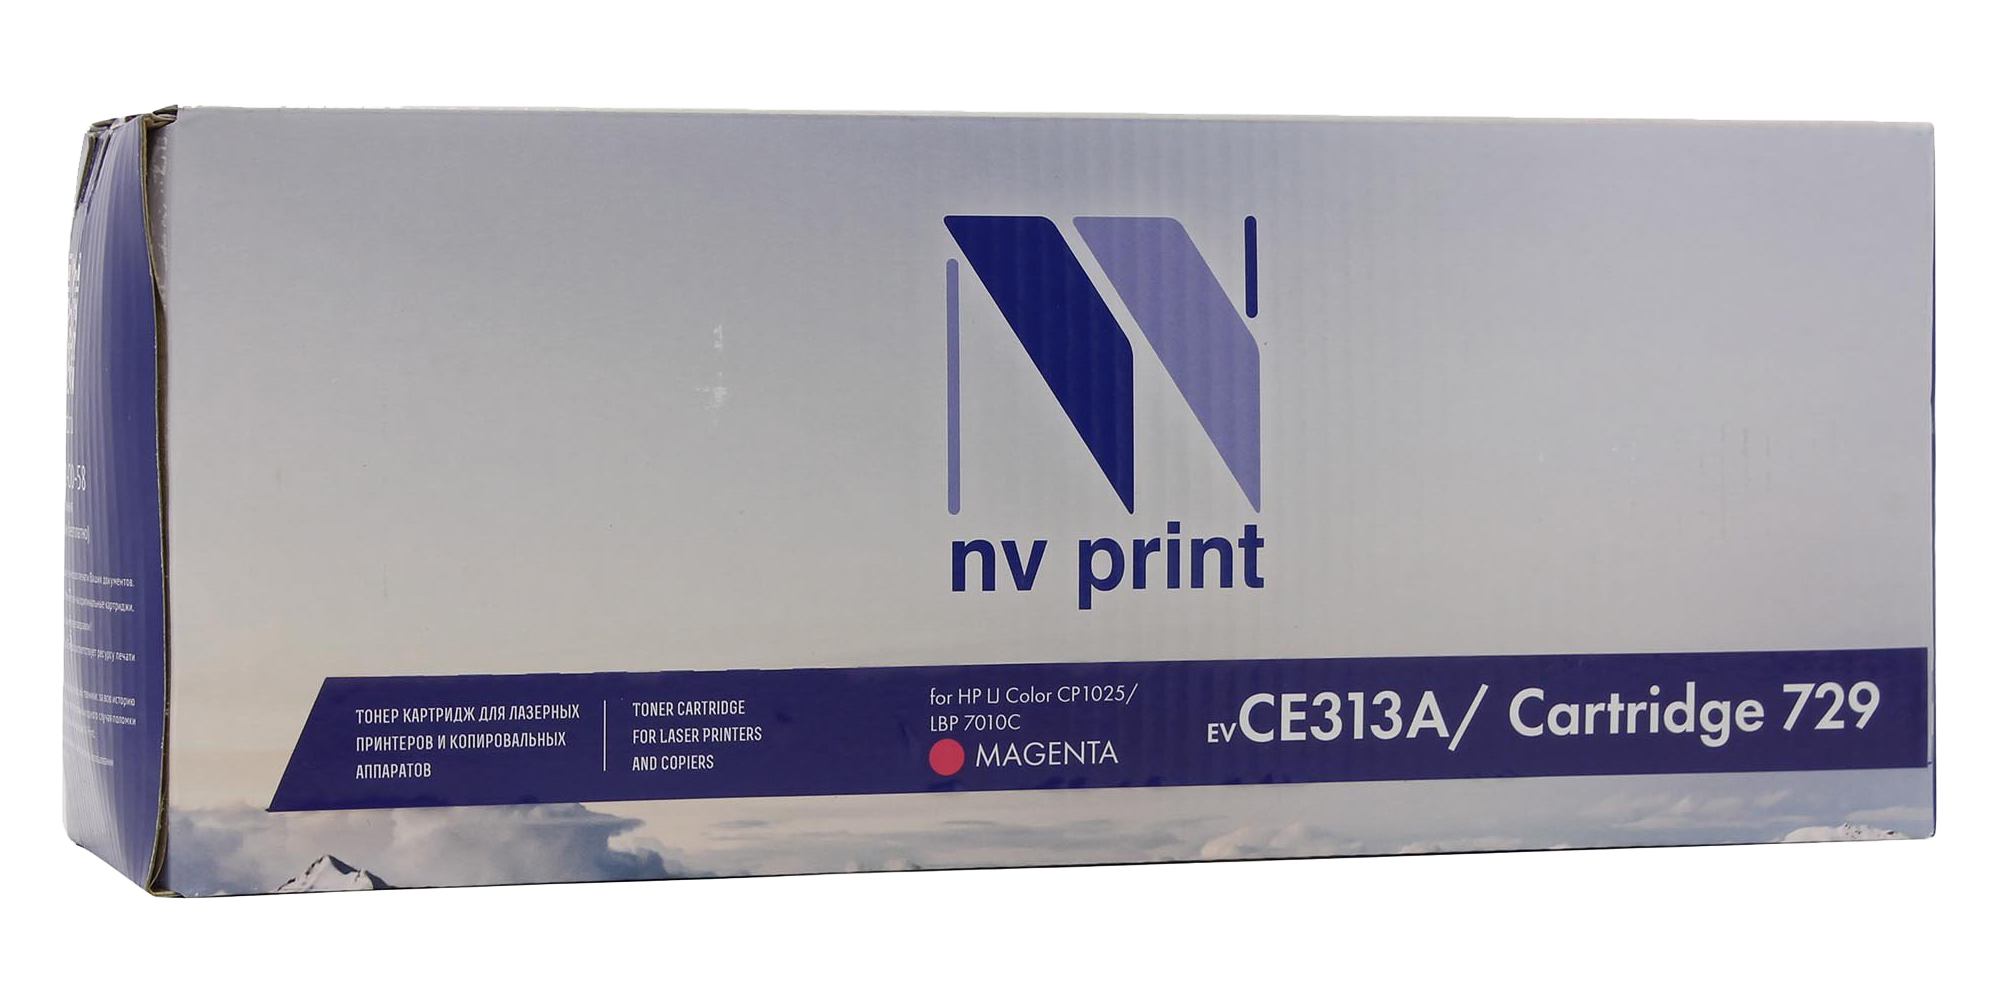 Картридж HP NV-Print (CE313A/Canon 729 Magenta) (1,0К) для CLJ CP1025/M175/M275/Canon LBP7010/7018 п